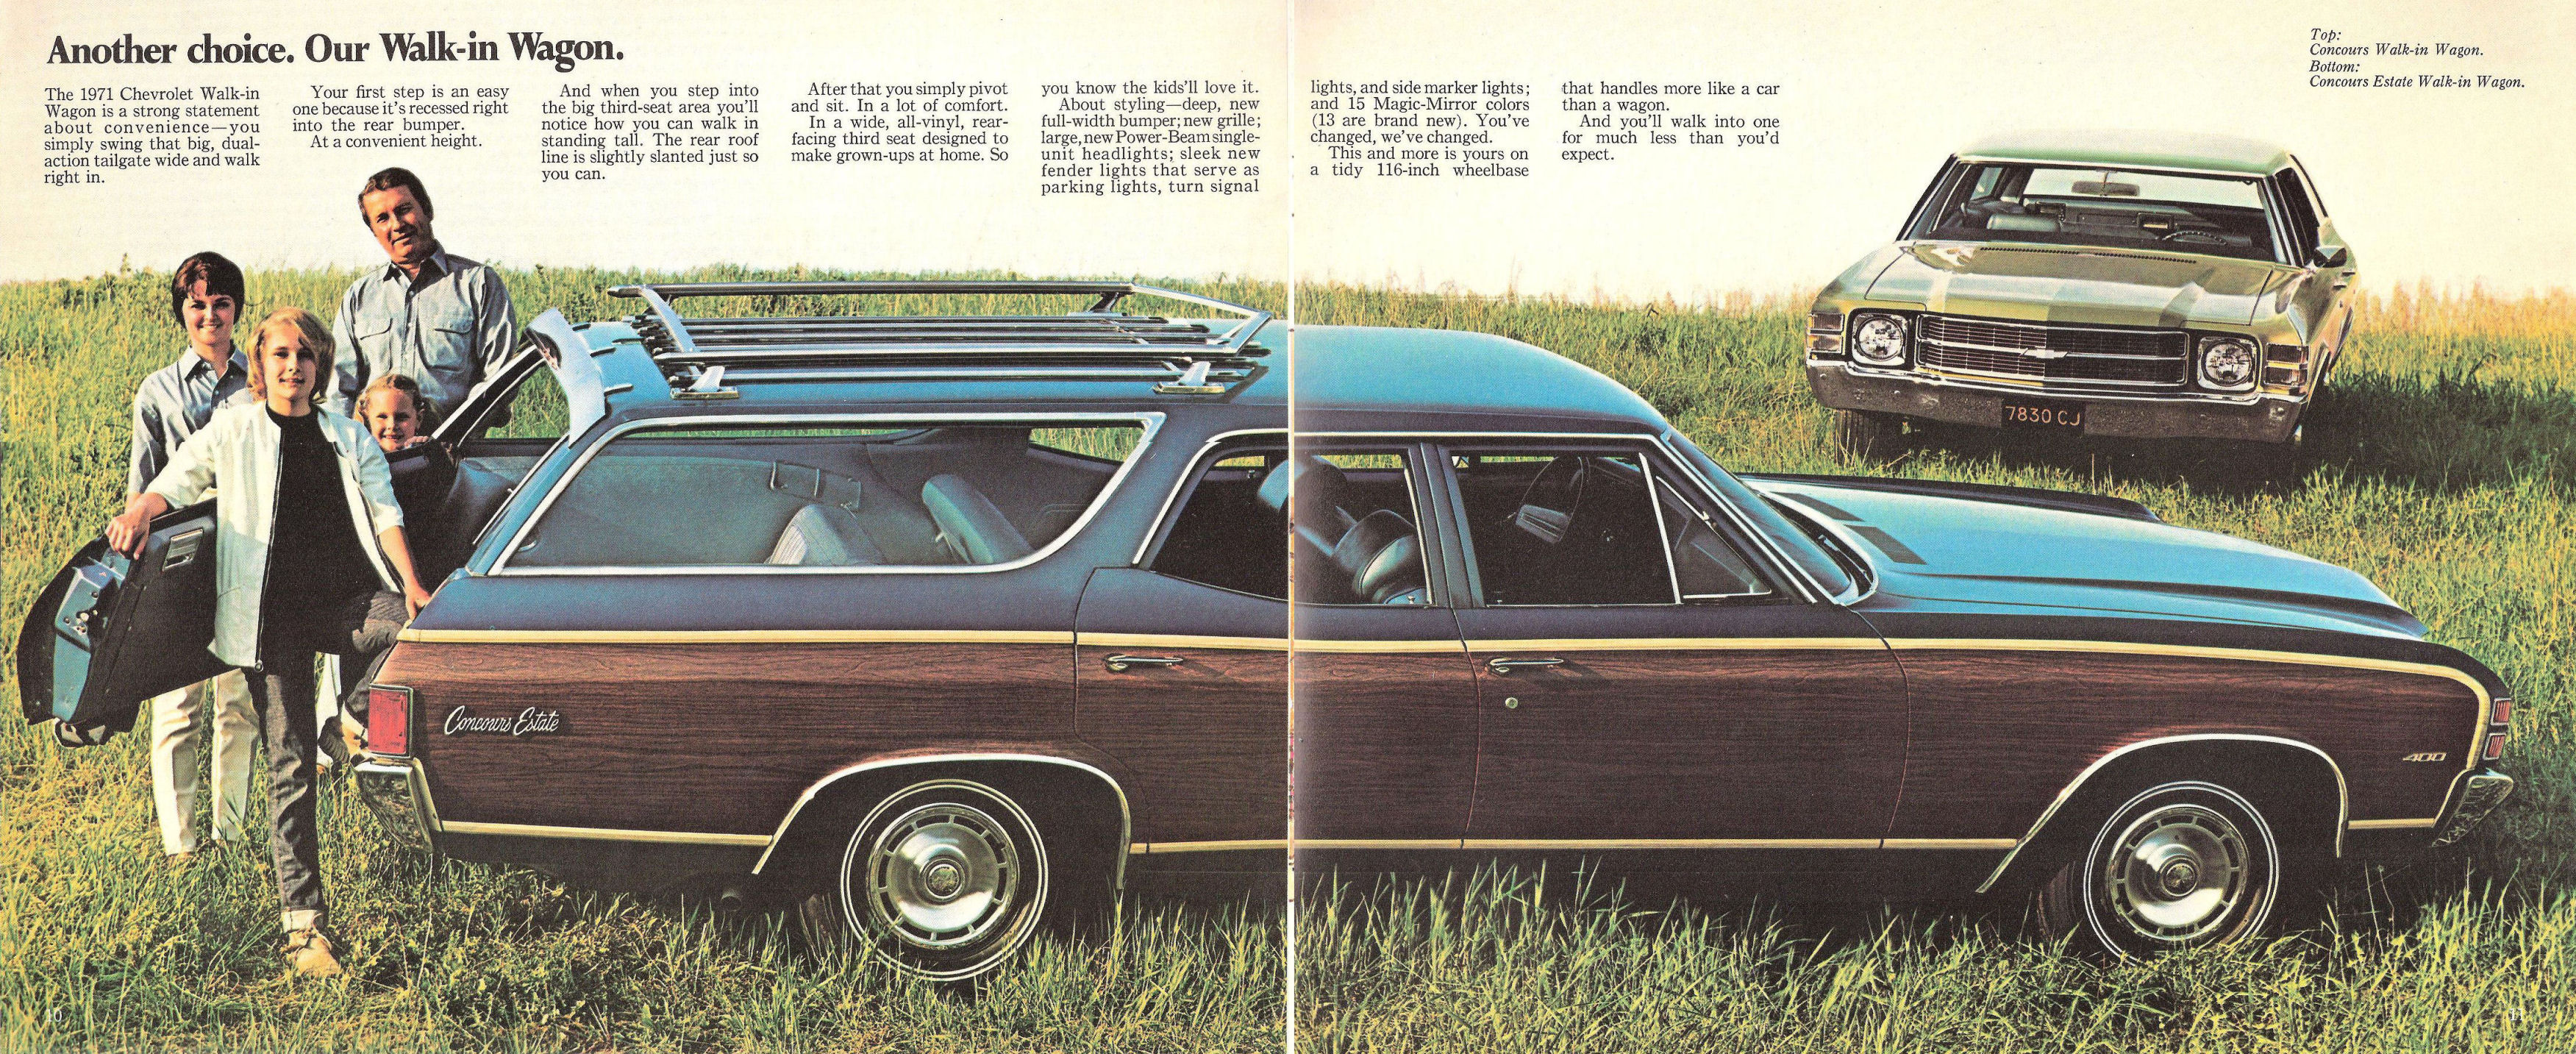 1971_Chevrolet_Wagons-10-11